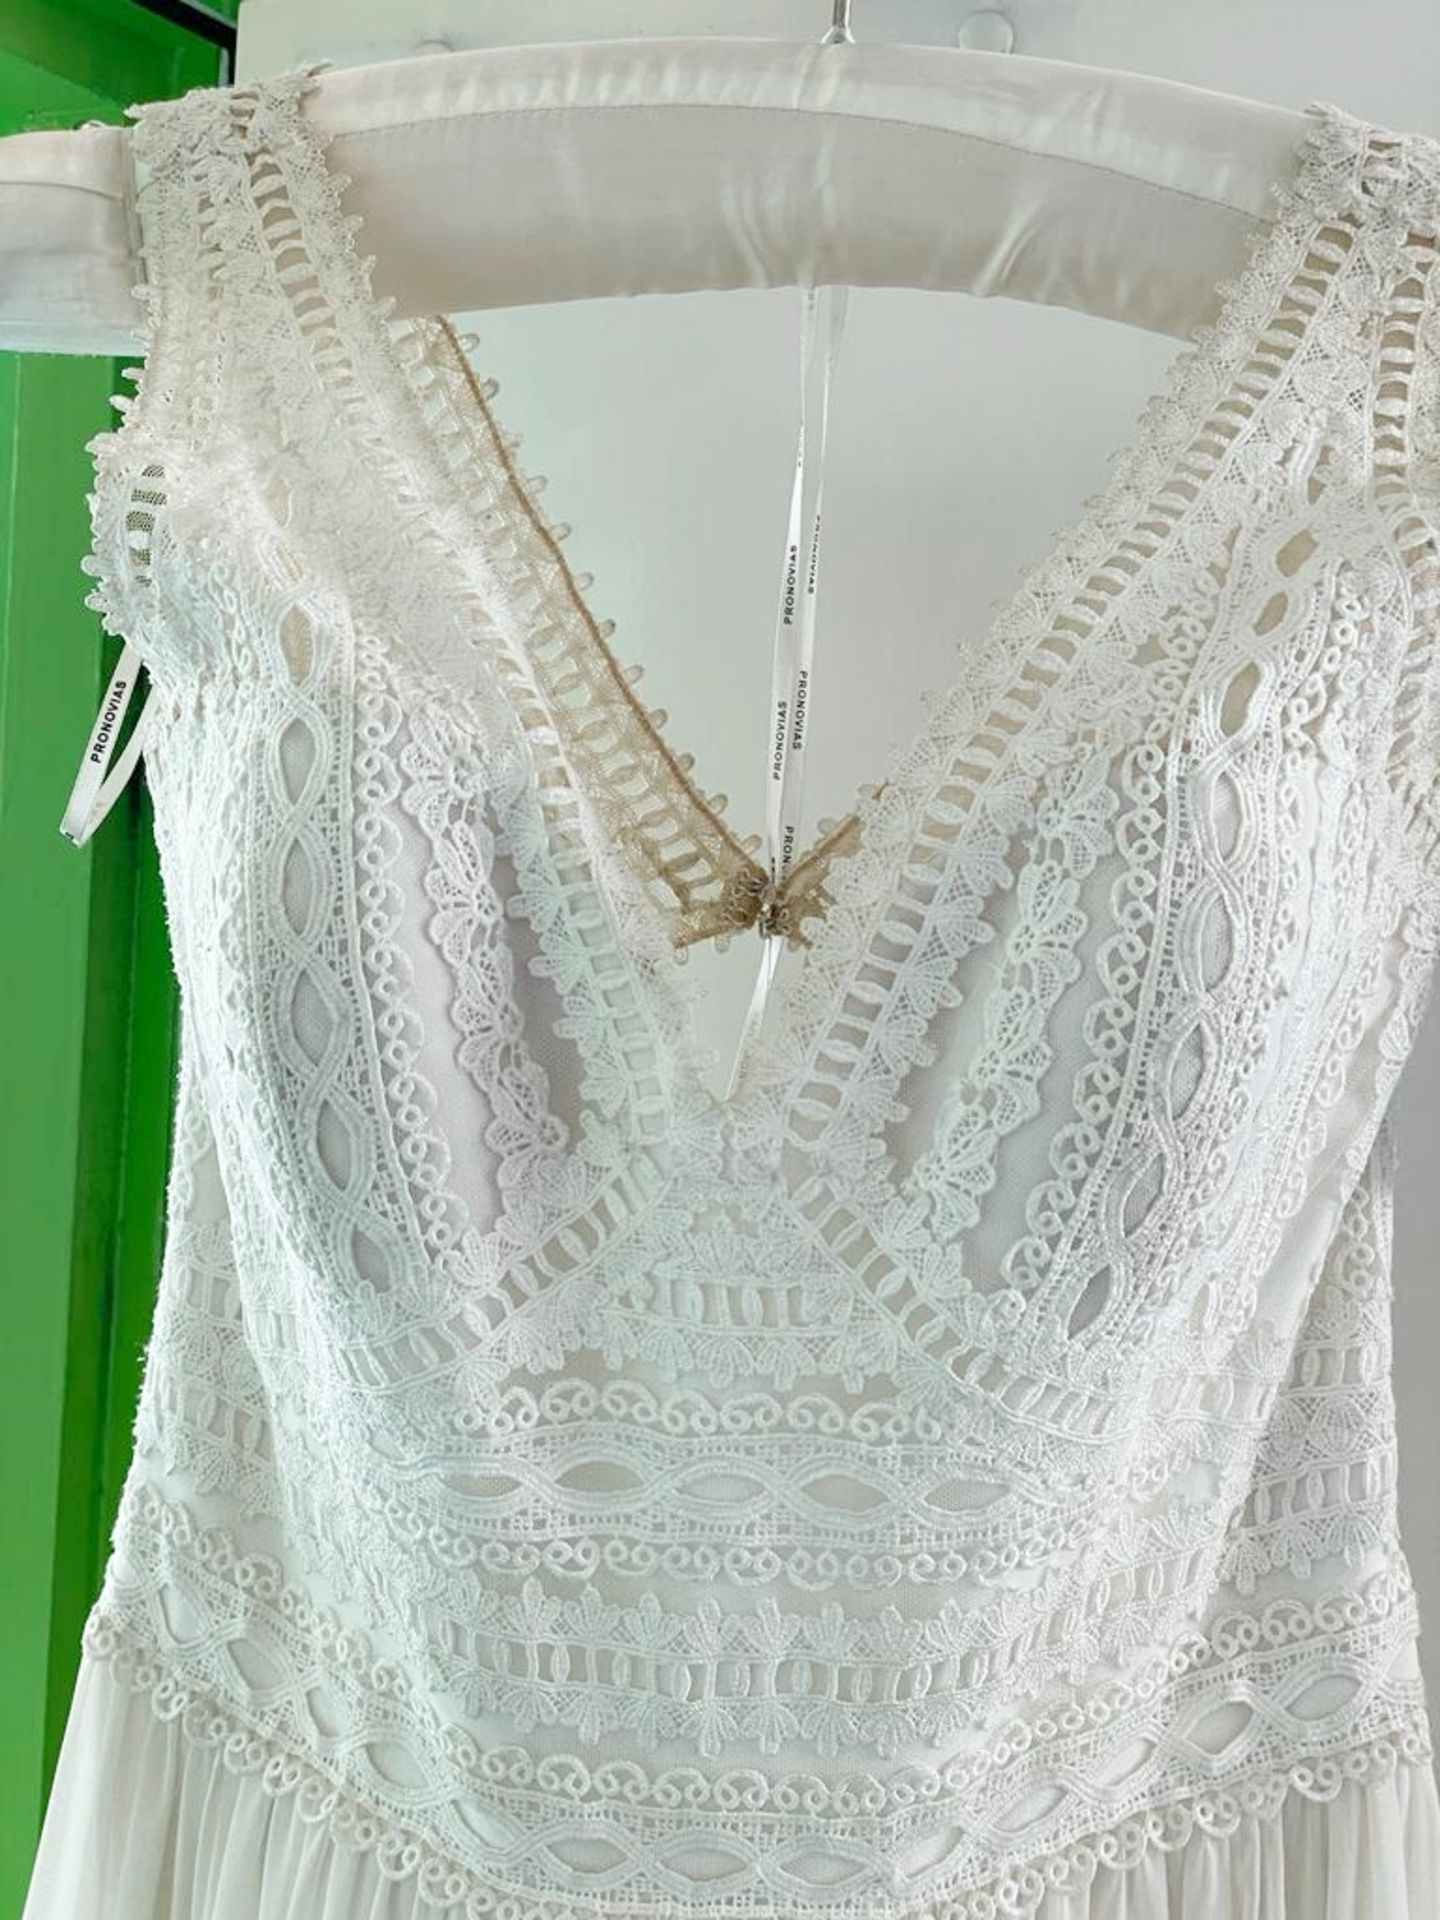 1 x PRONOVIAS 'Dramia' Designer Crocheted Lace Wedding Dress Bridal Gown, With Chiffon Gathered - Image 6 of 20